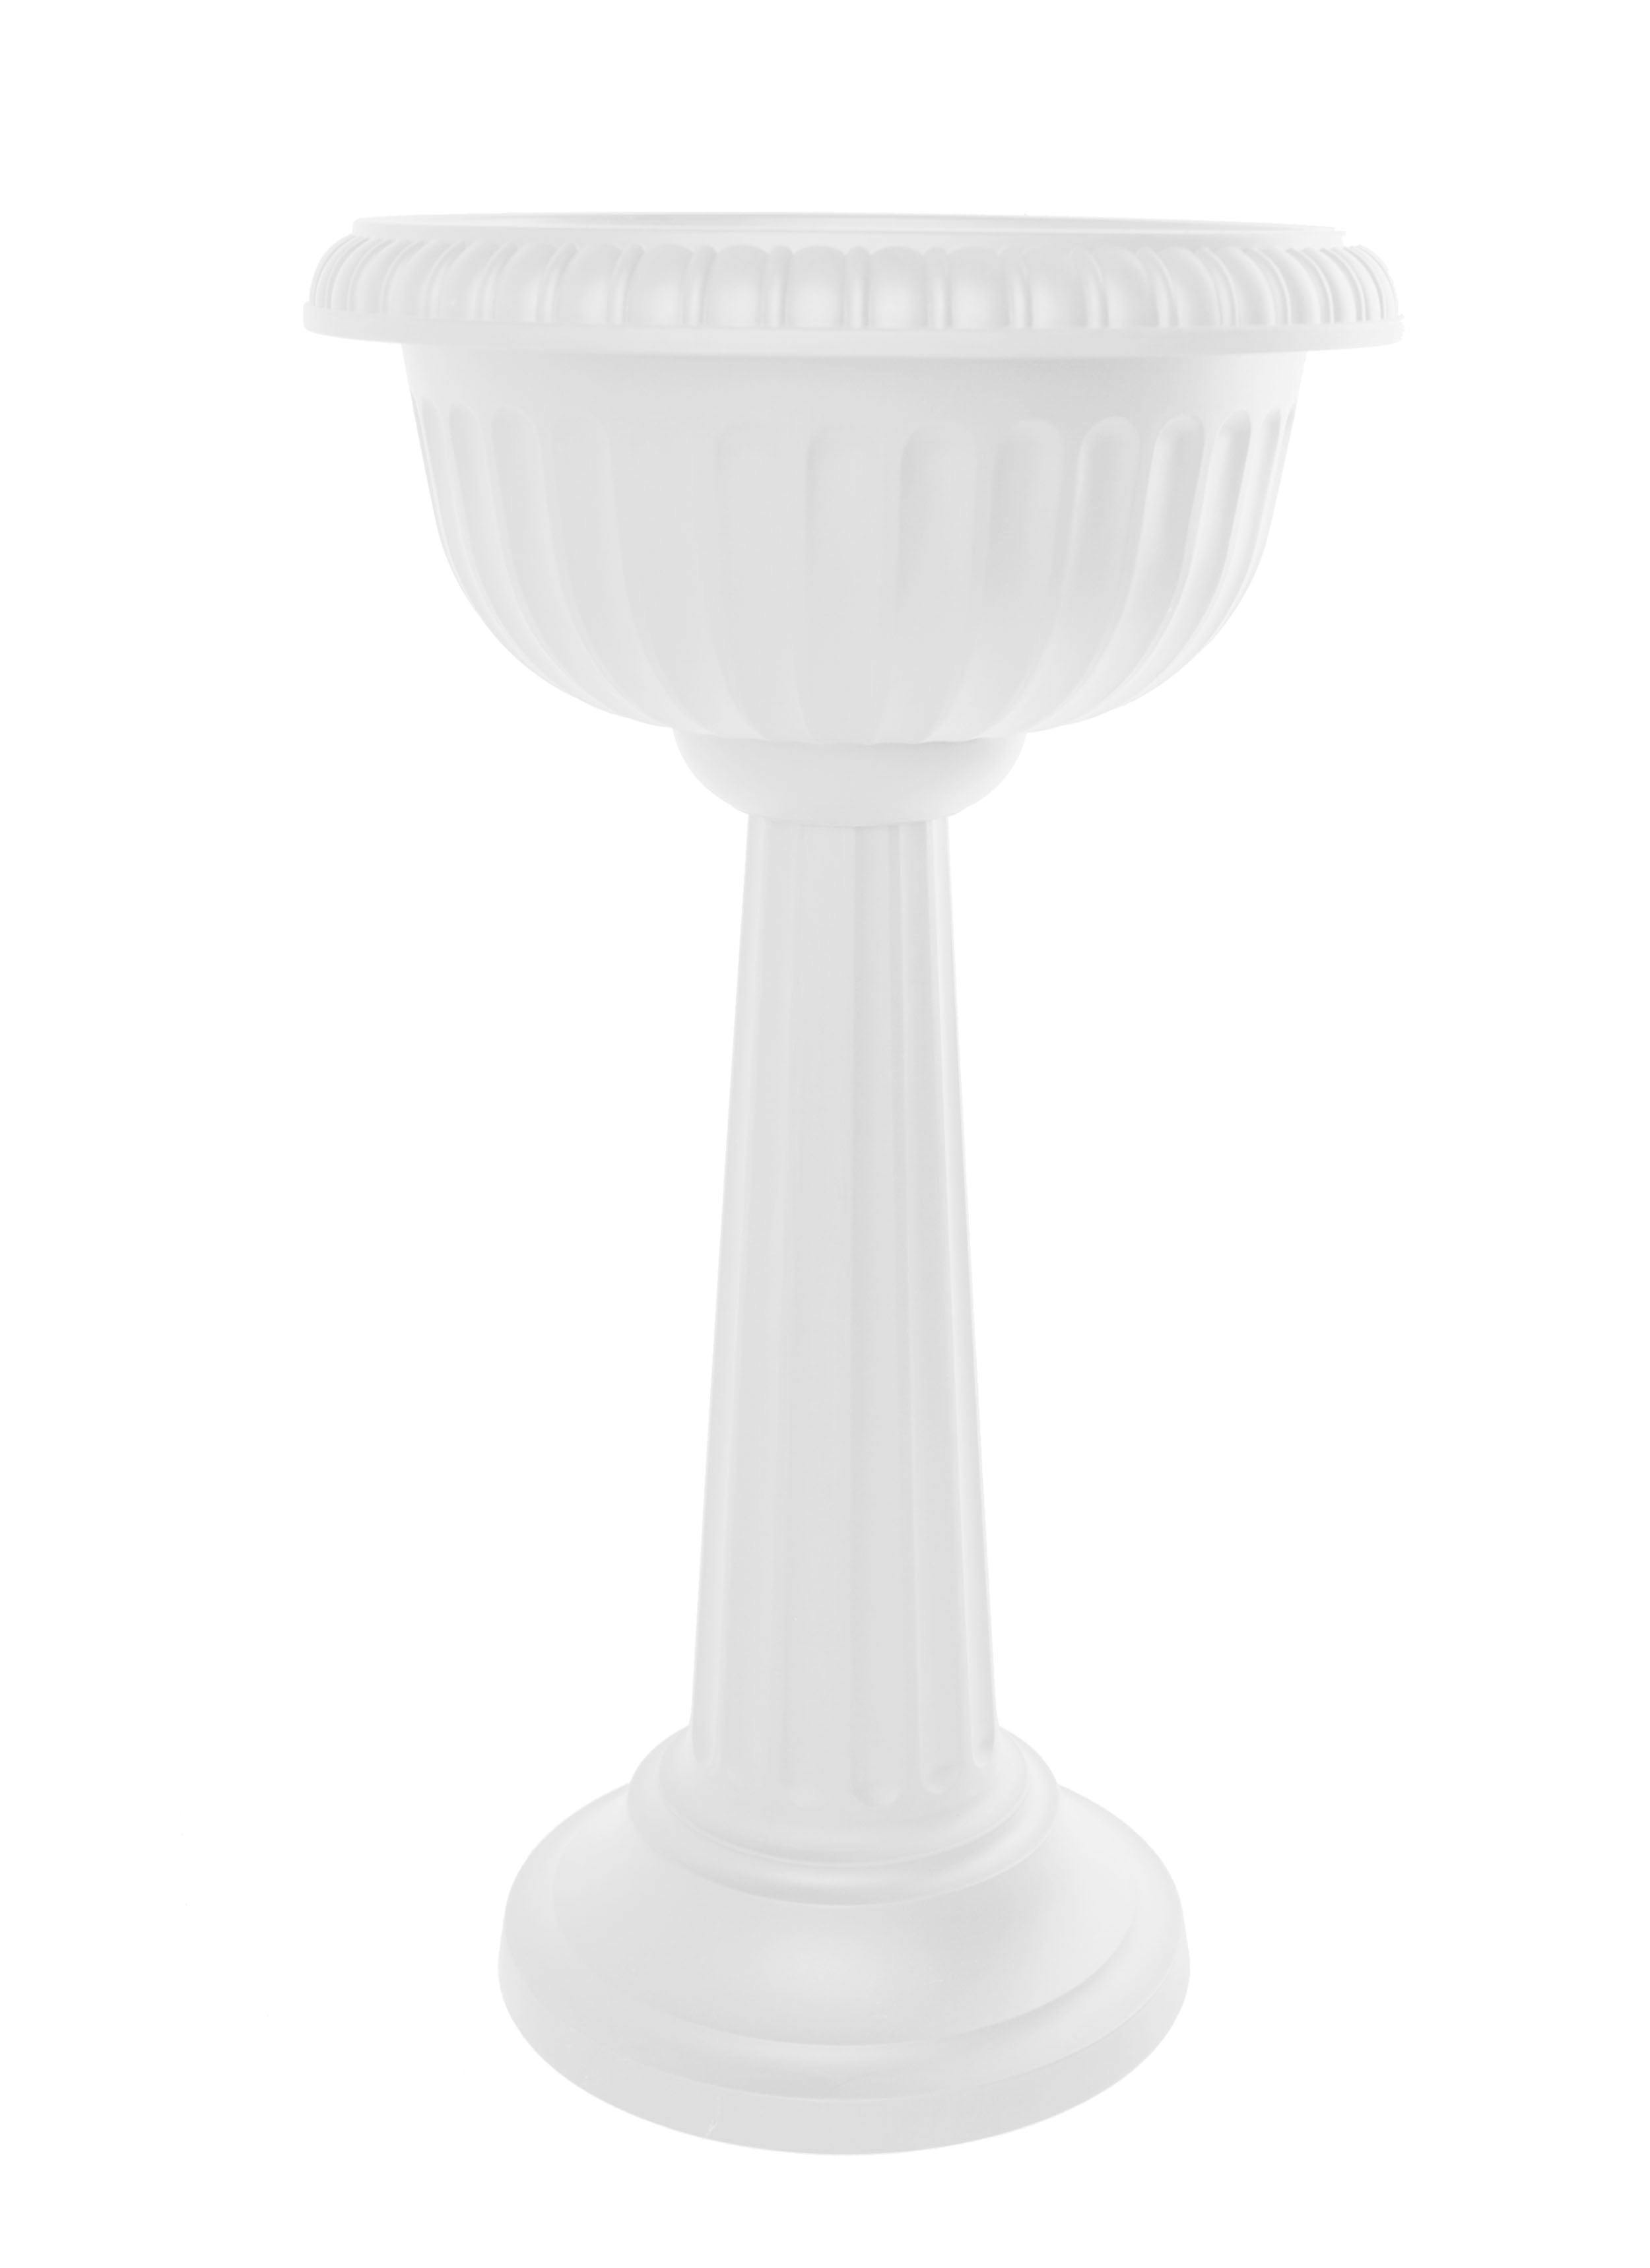 Casper White Grecian Urn Pedestal Planter, 32" Tall